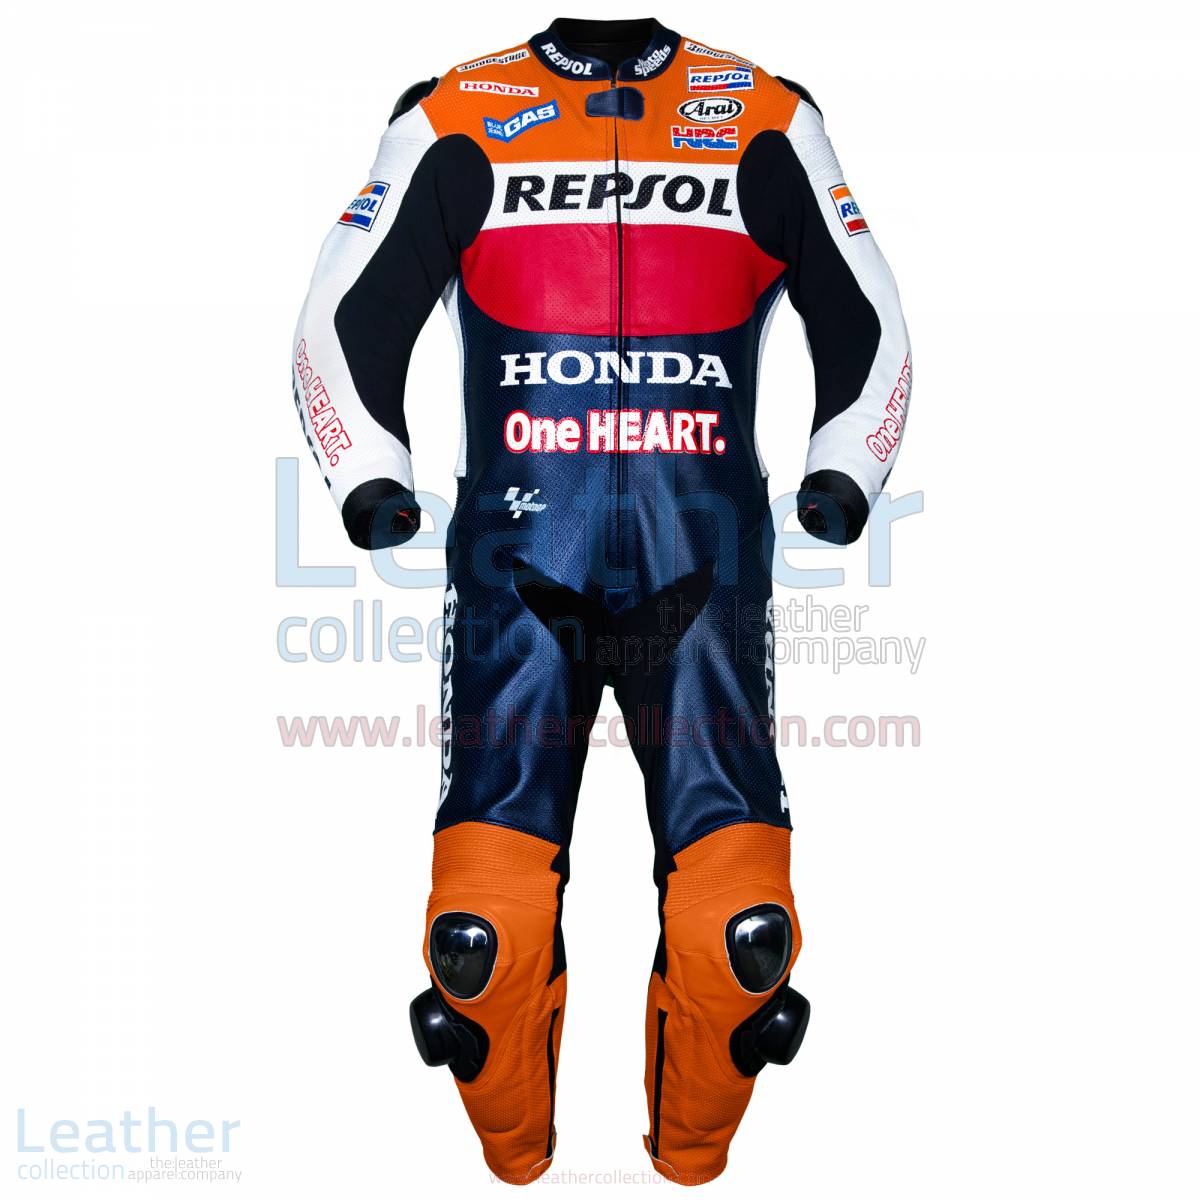 Casey Stoner 2012 One Heart Honda Repsol Leathers – Honda Suit